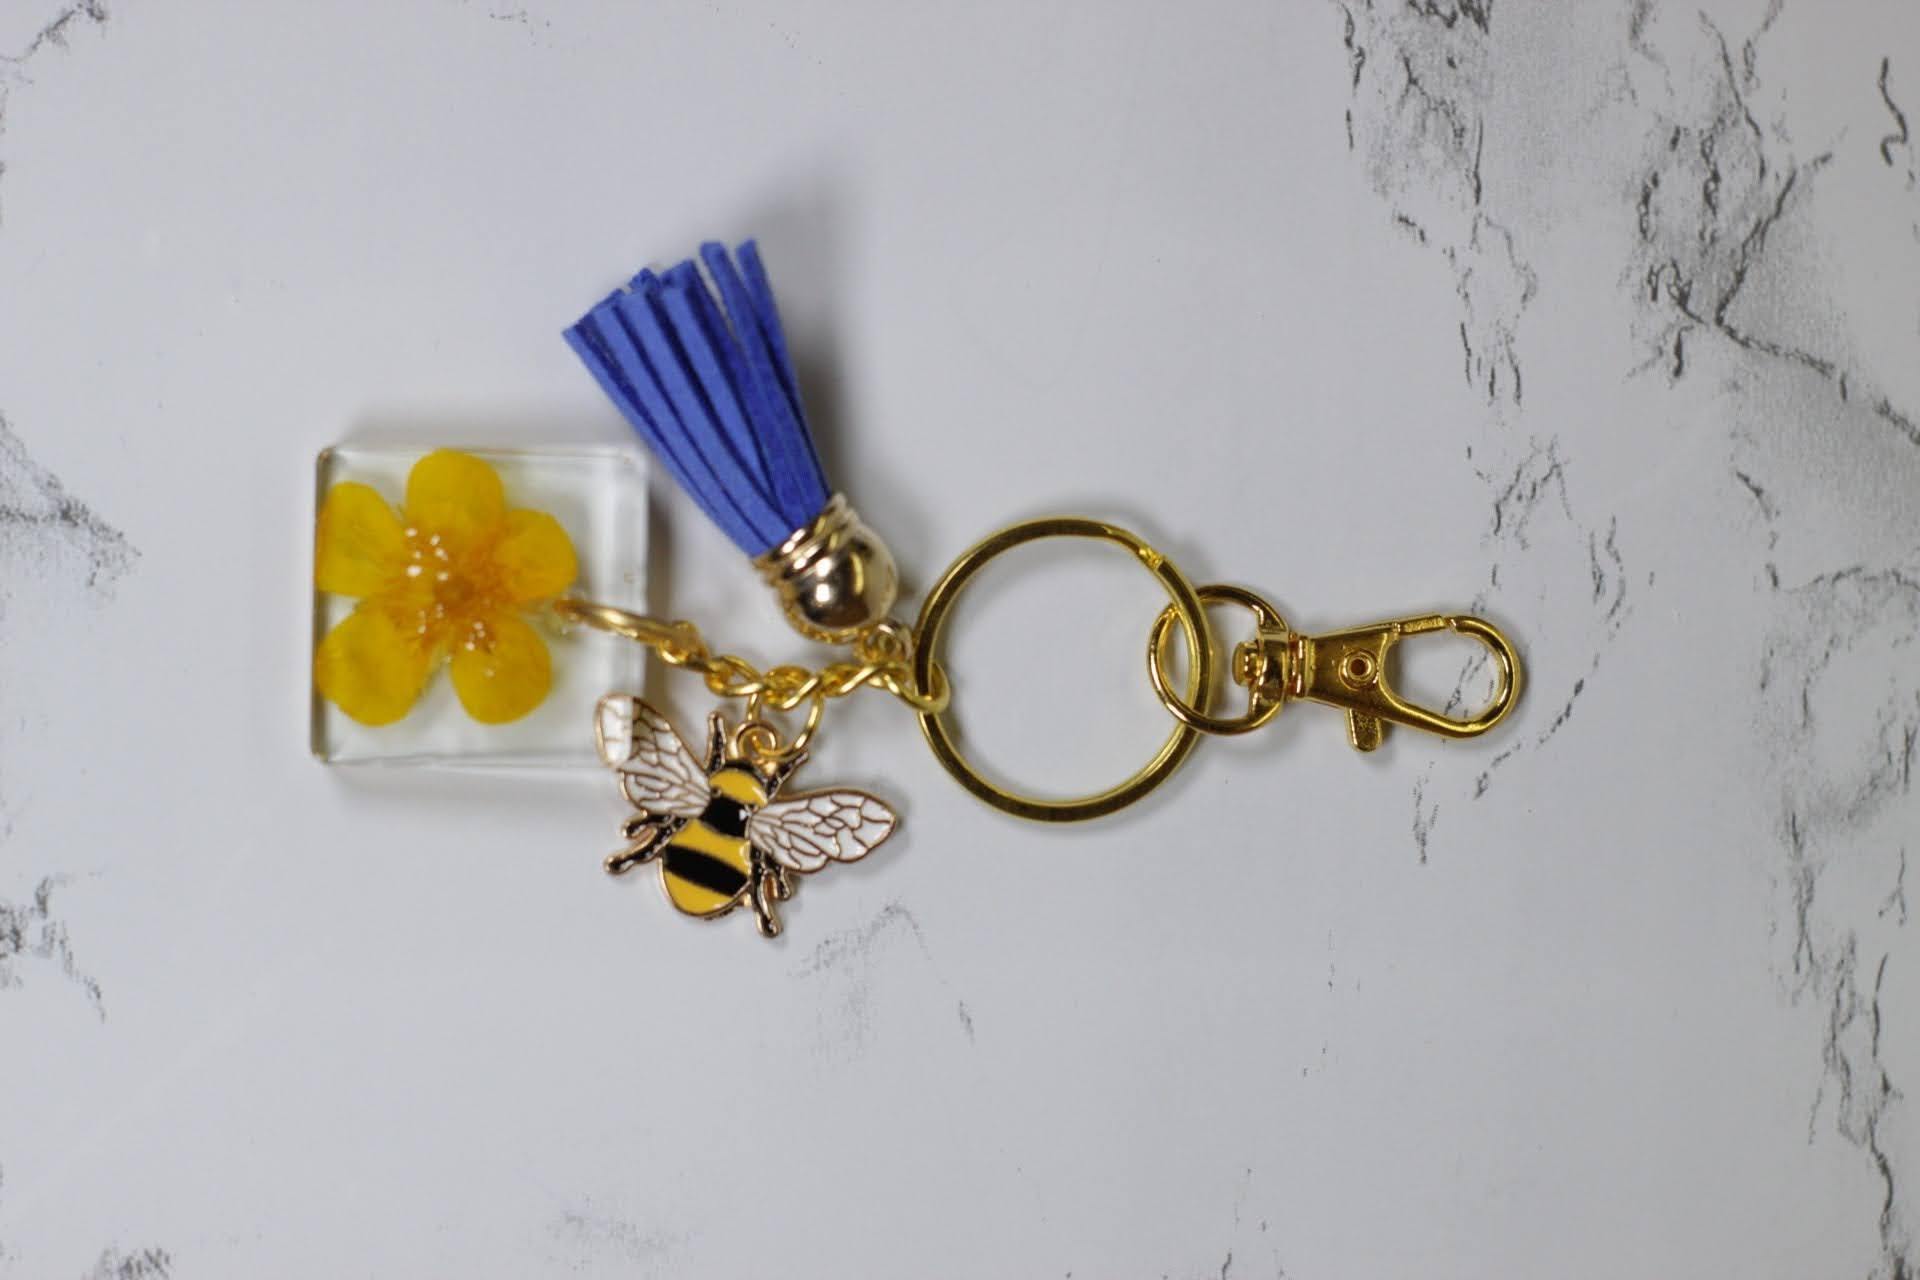 White Flower with a Bee Bag Charm / Keychain – shopkiasha